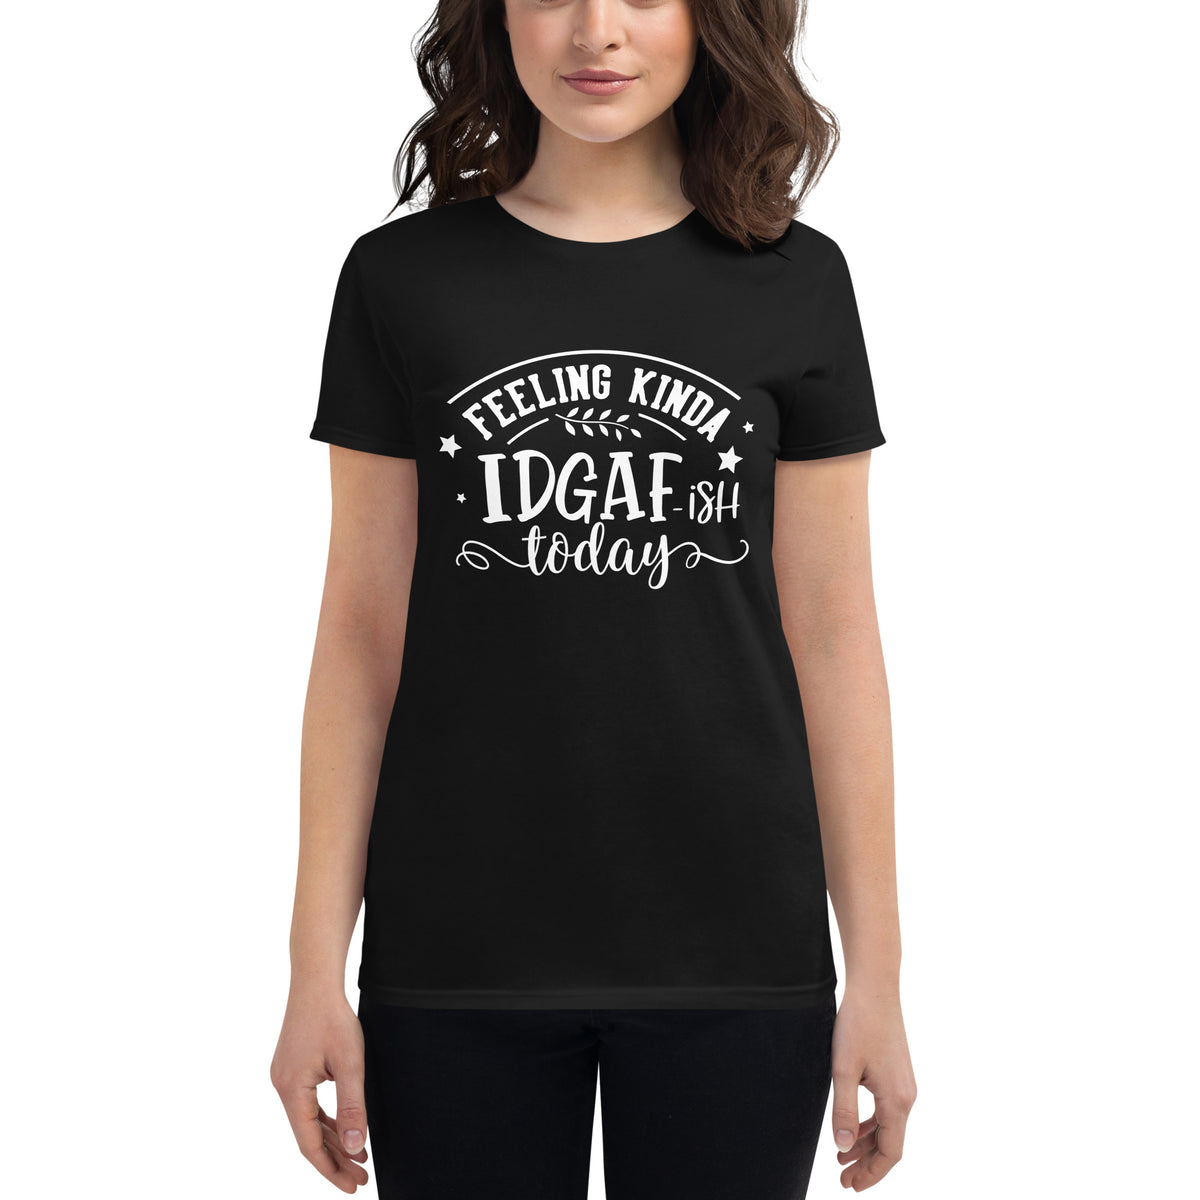 IDGAF-ish Women's Short Sleeve T-Shirt